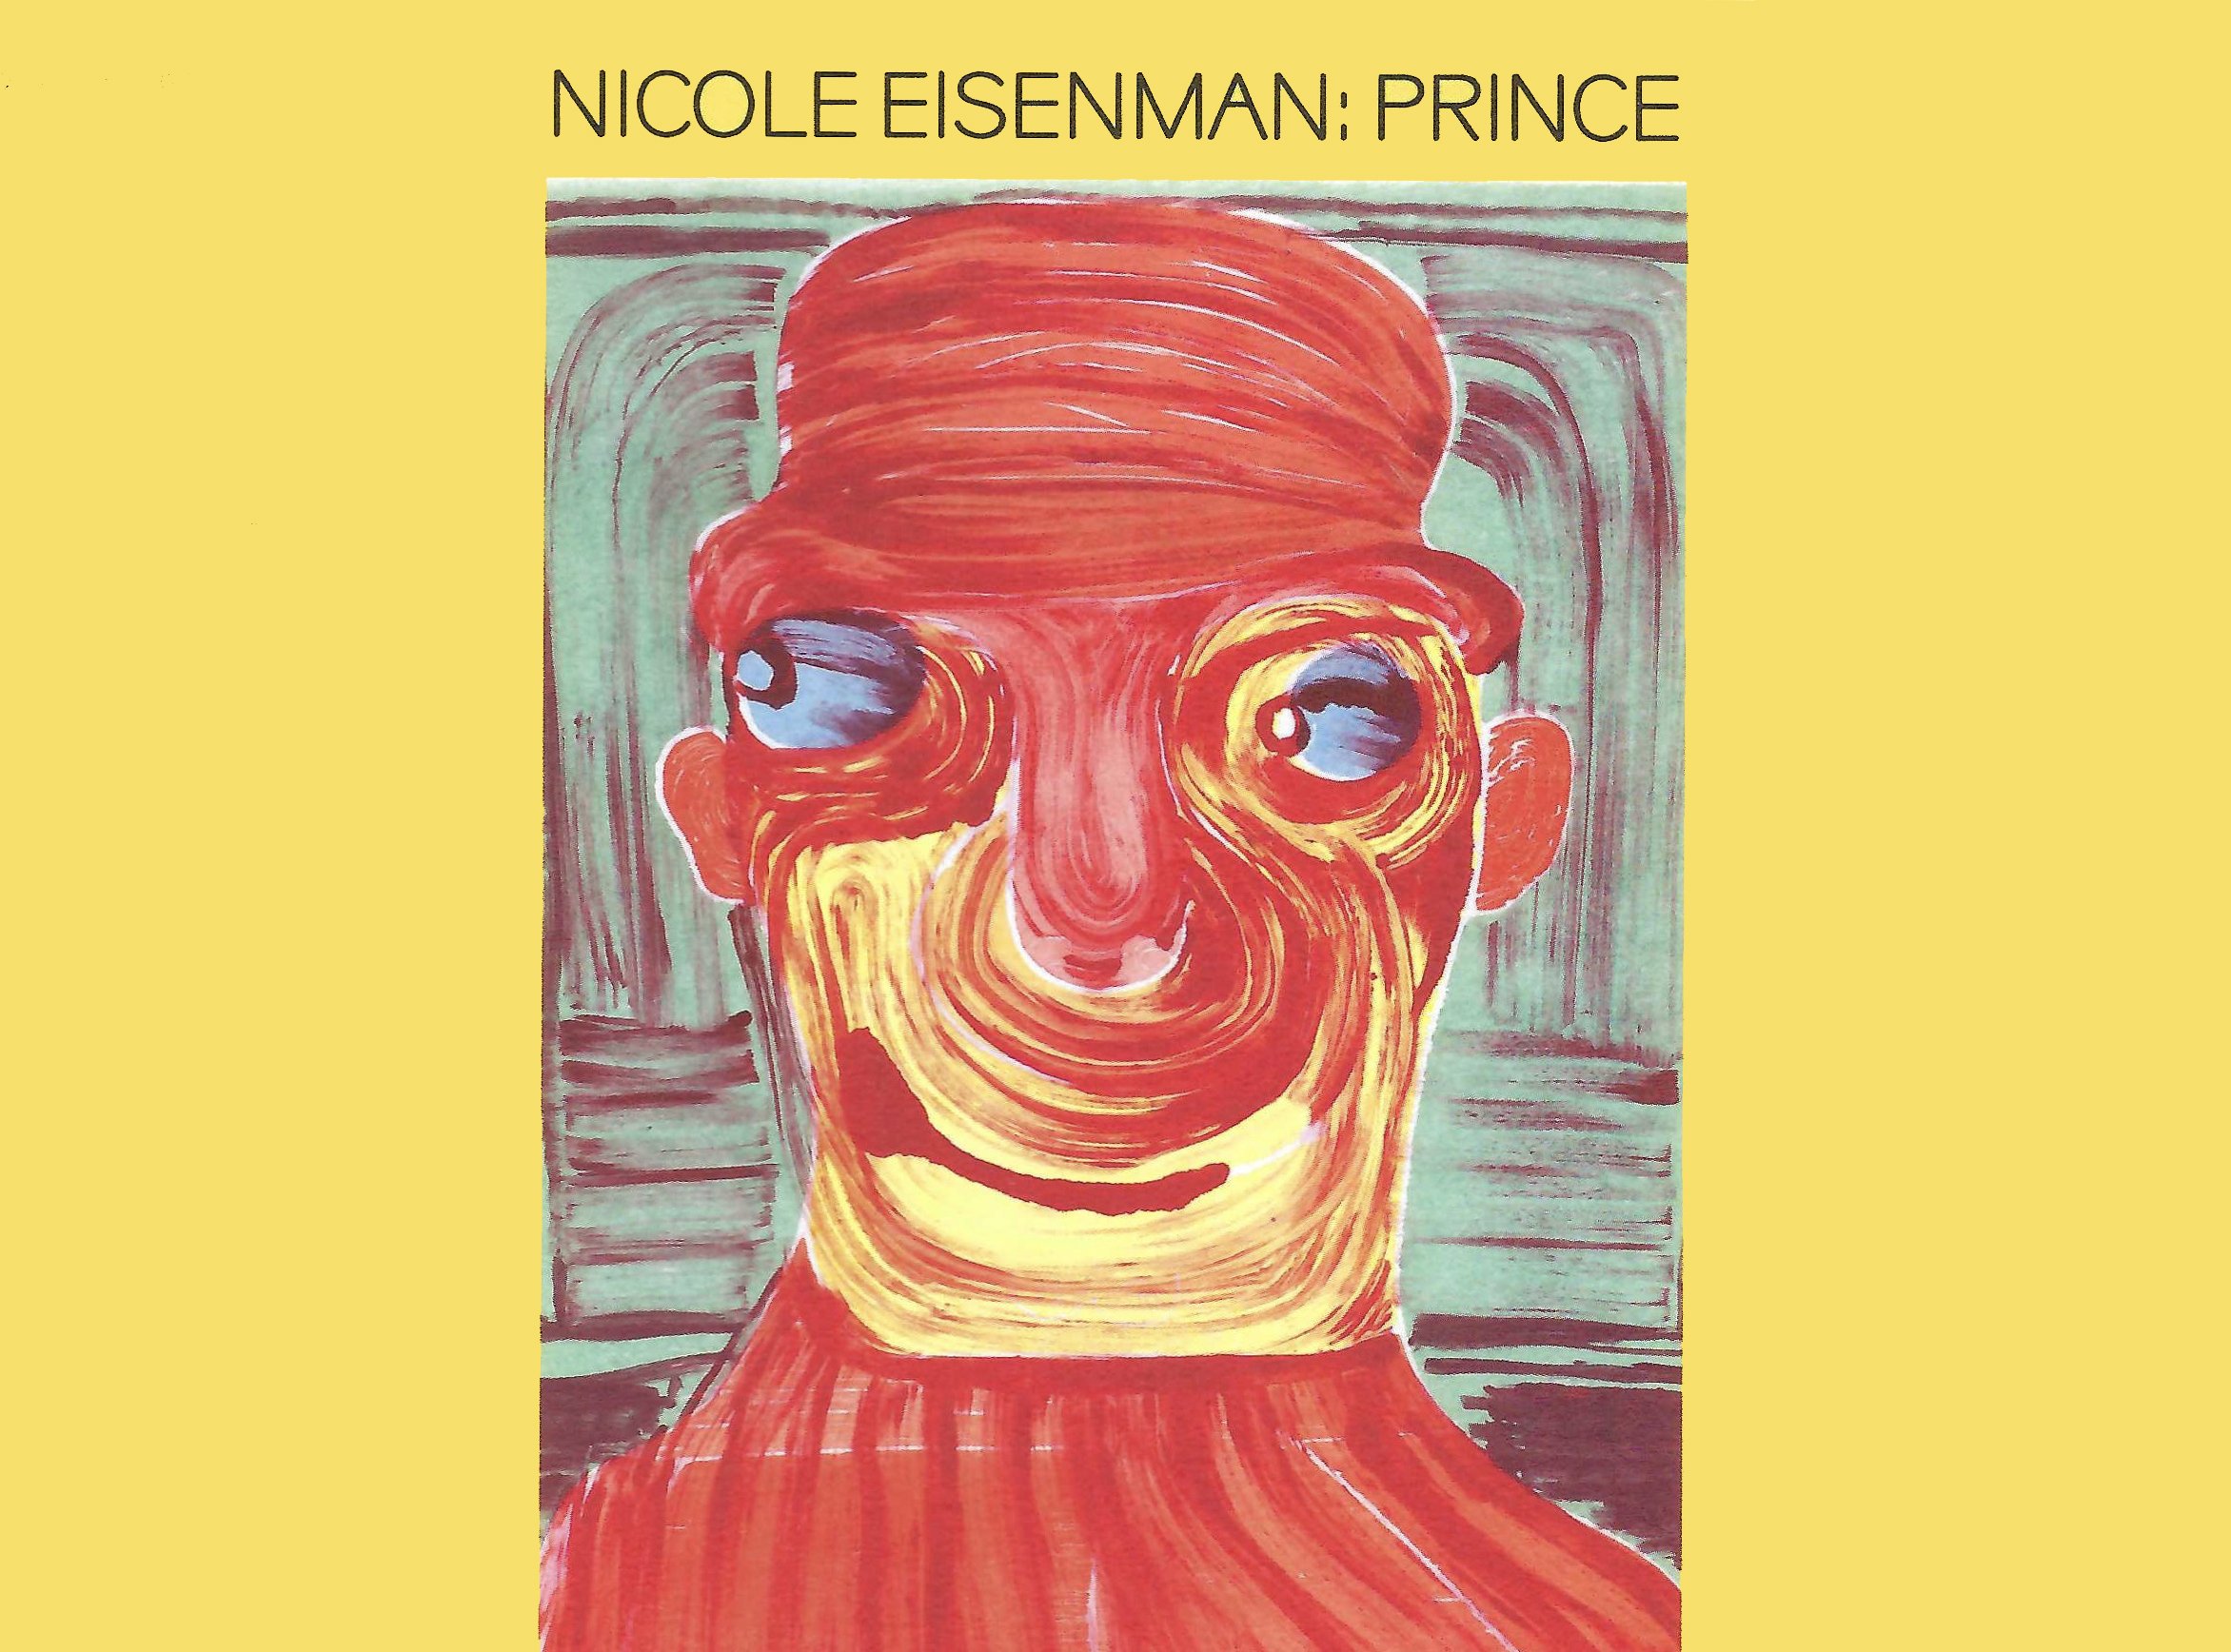 Print Center New York - Nicole Eisenman: Prince